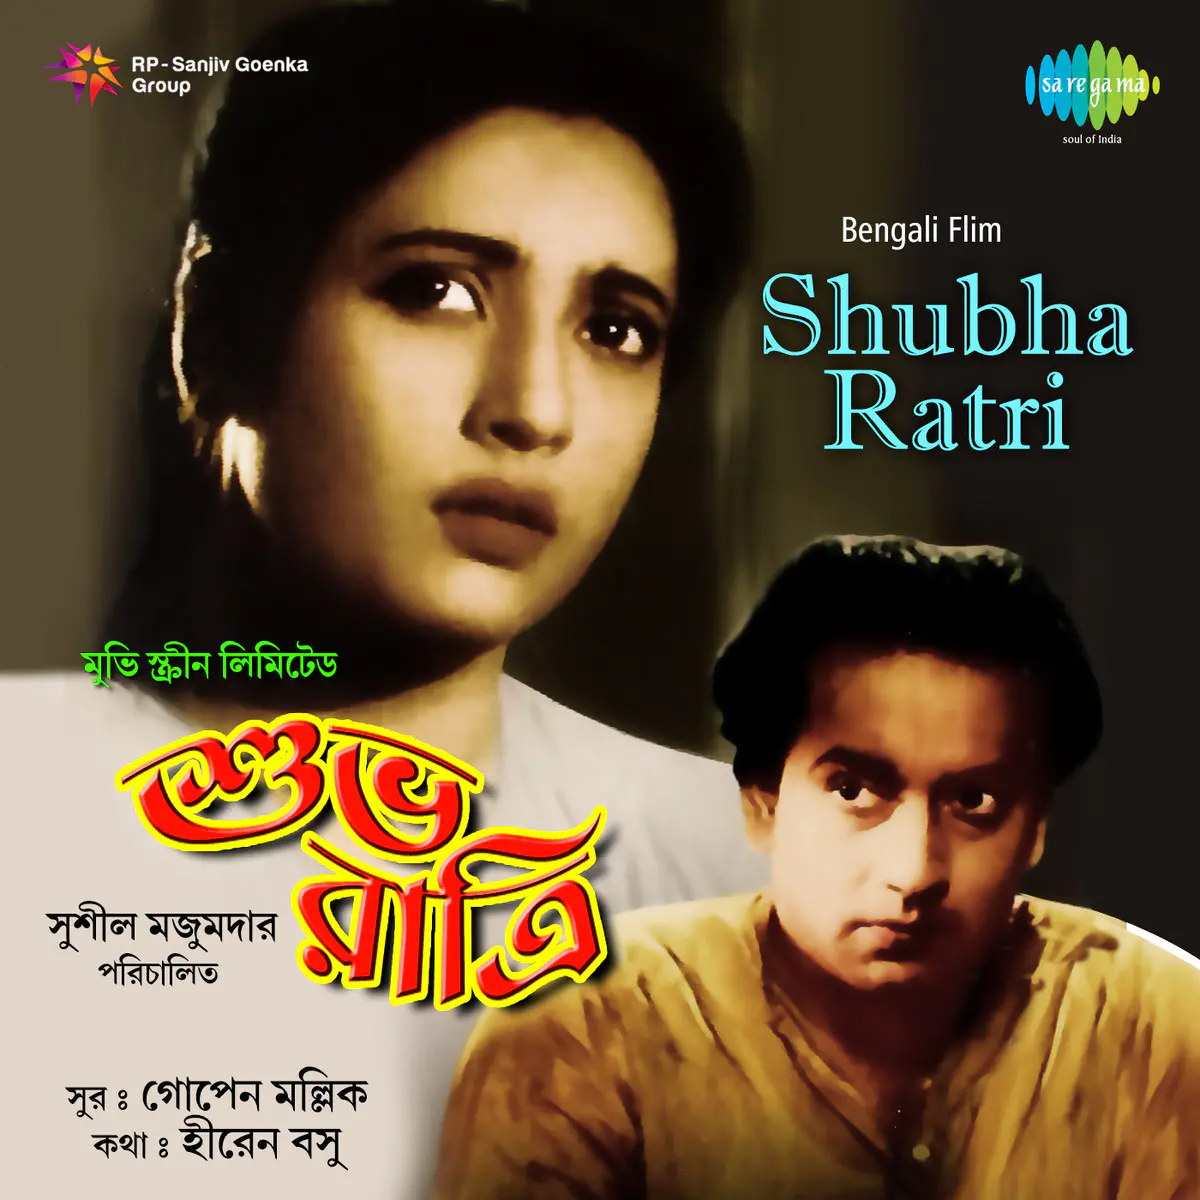 Shubha Ratri Songs Download Shubha Ratri Mp3 Bengali Songs Online